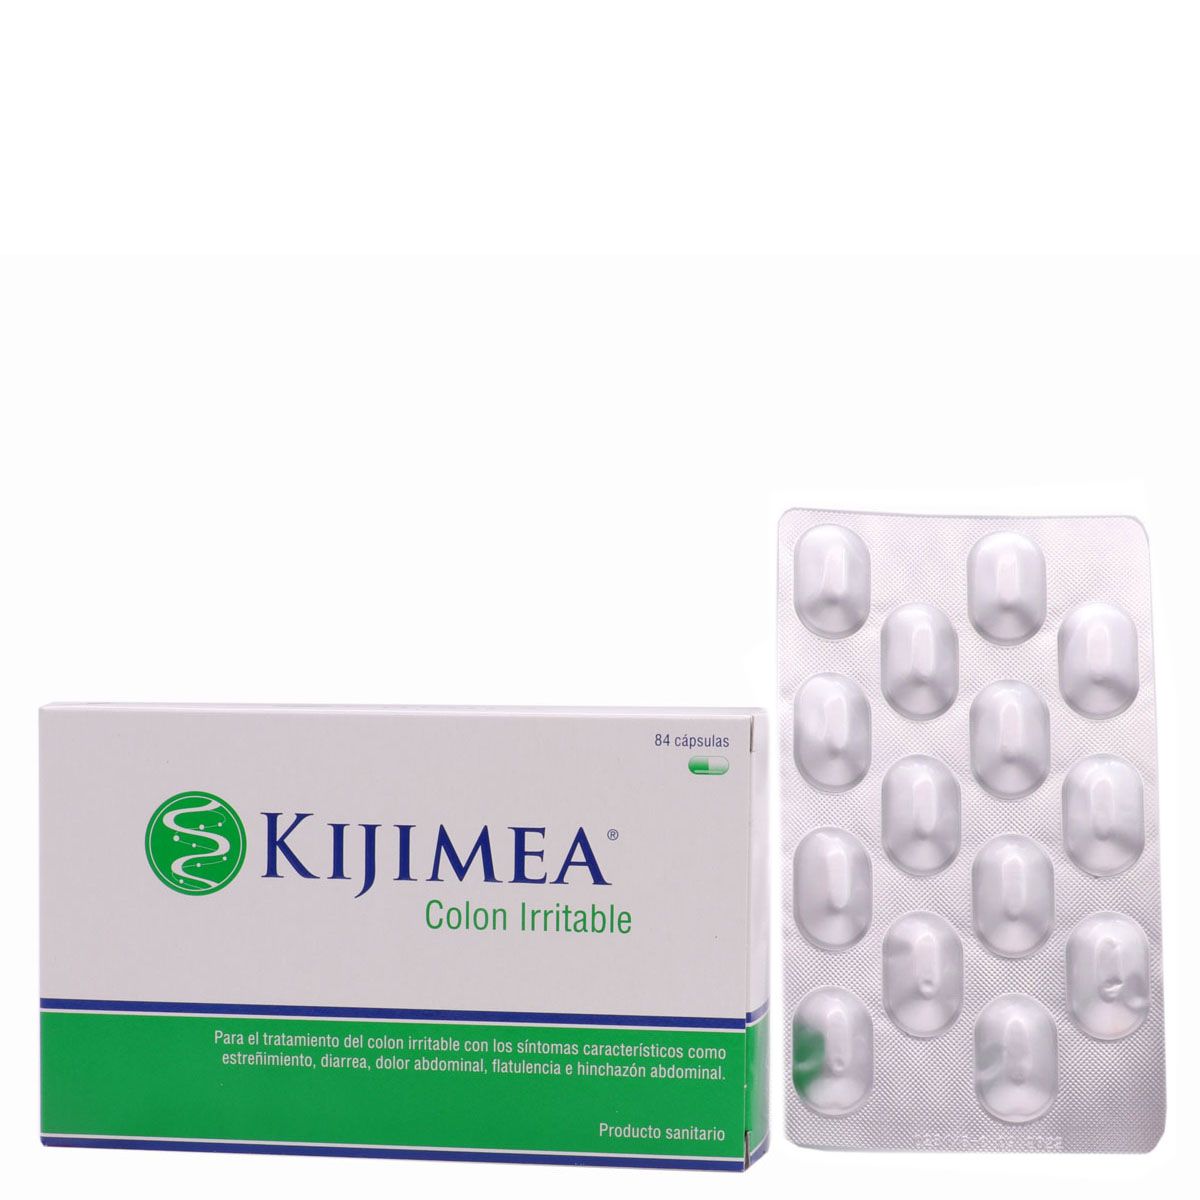 Comprar kijimea colon irritable pro 84 caps a precio online